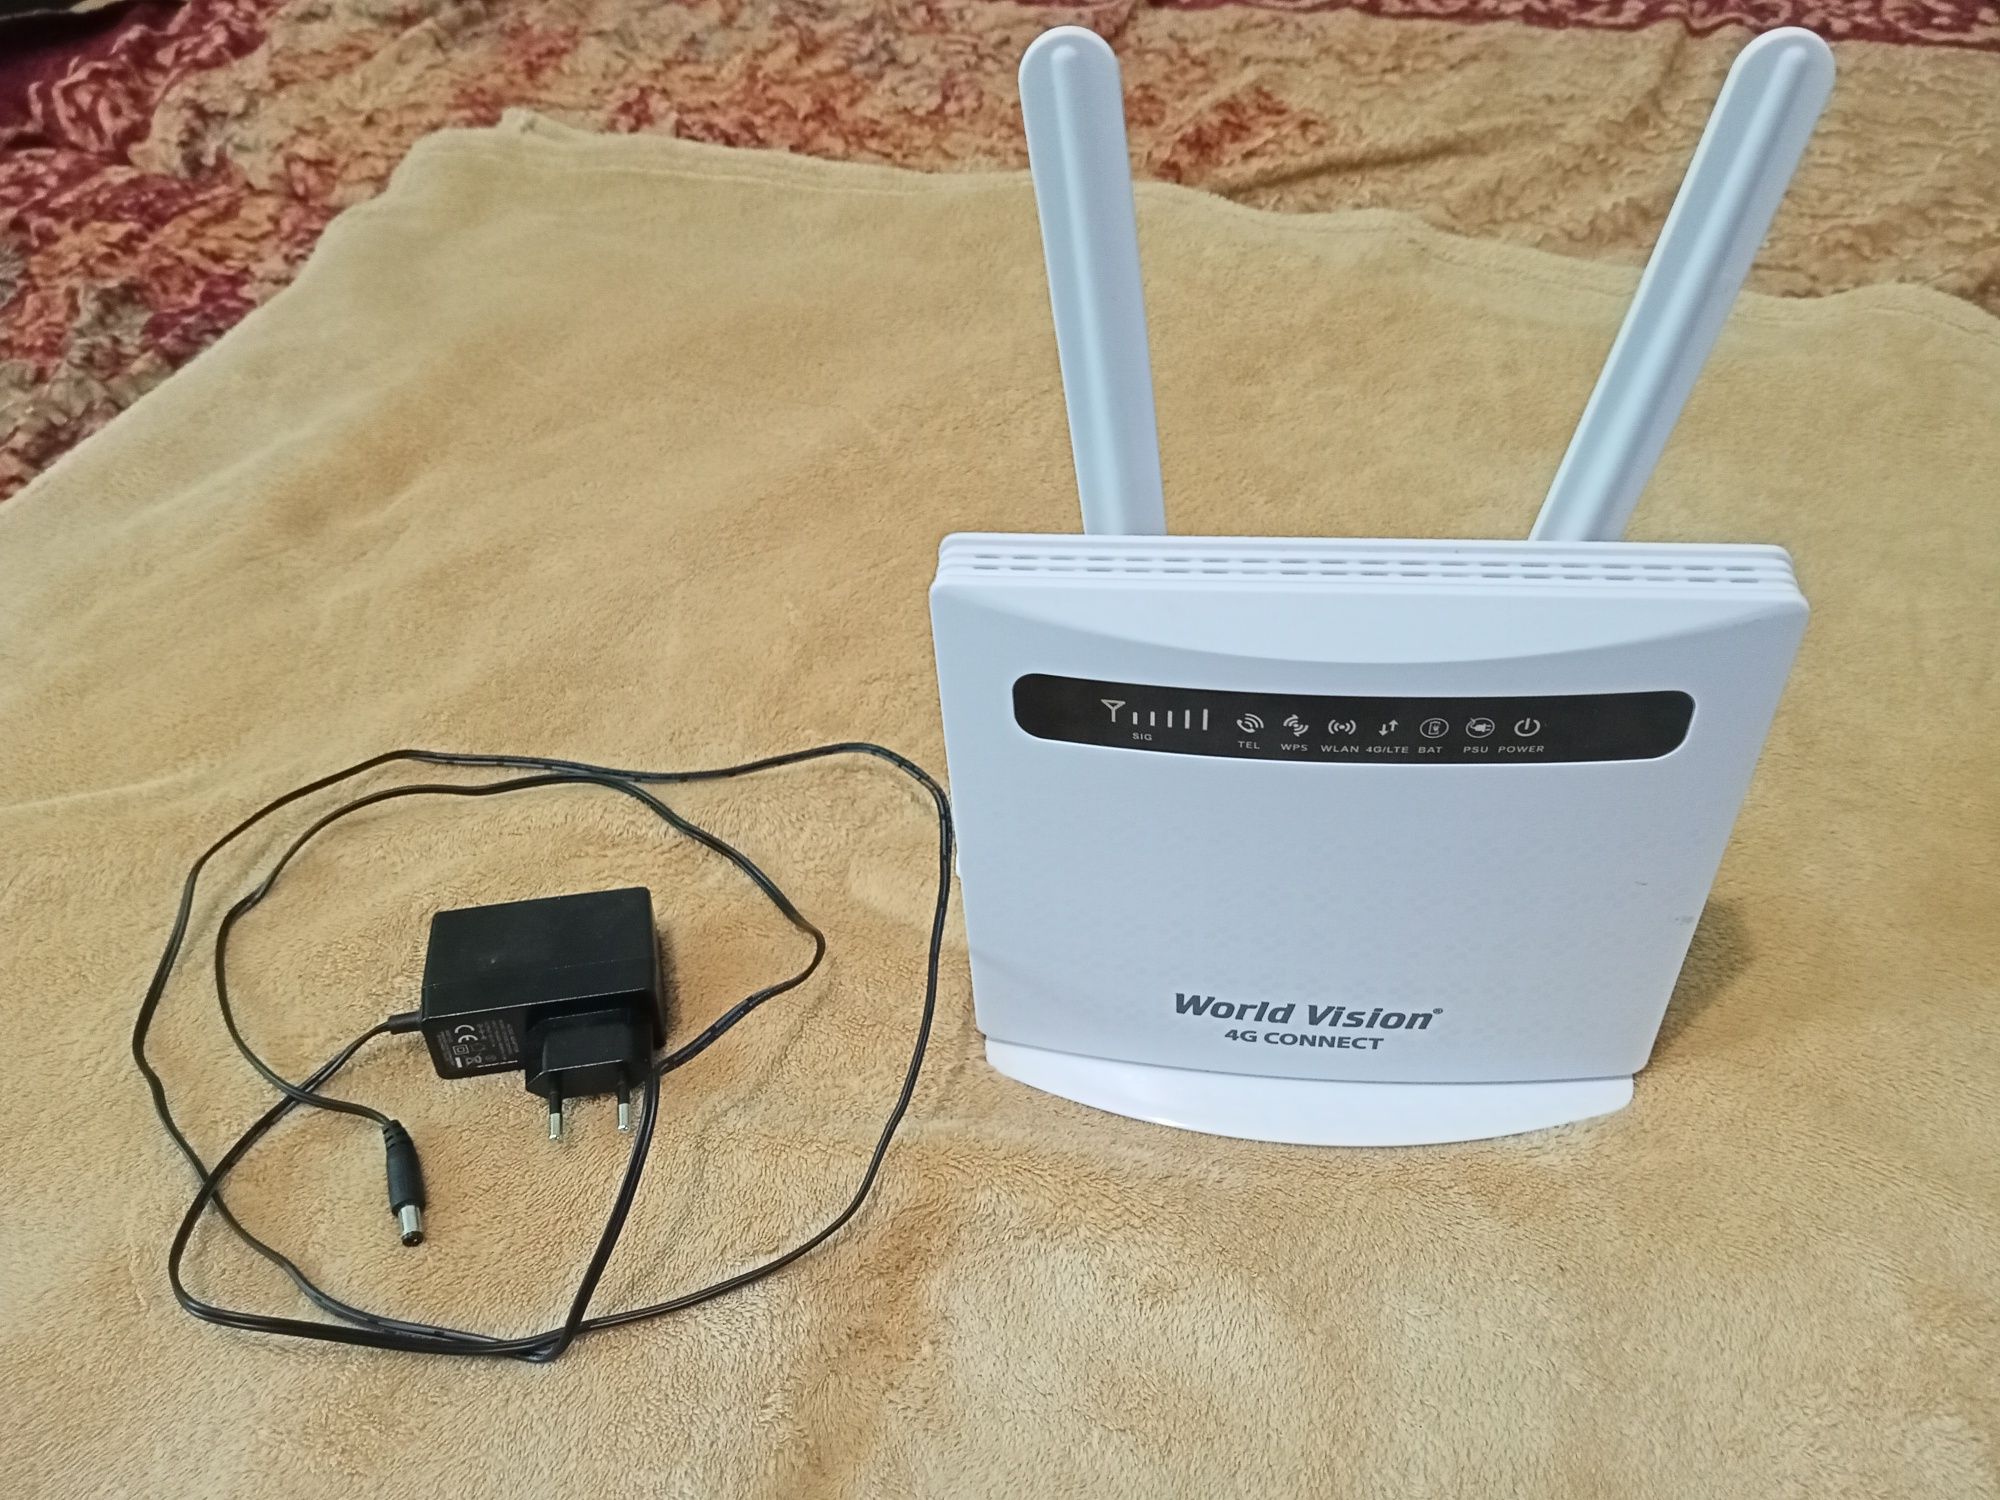 Продам автономный Wi-fi роутер World Vision 4G Connect.